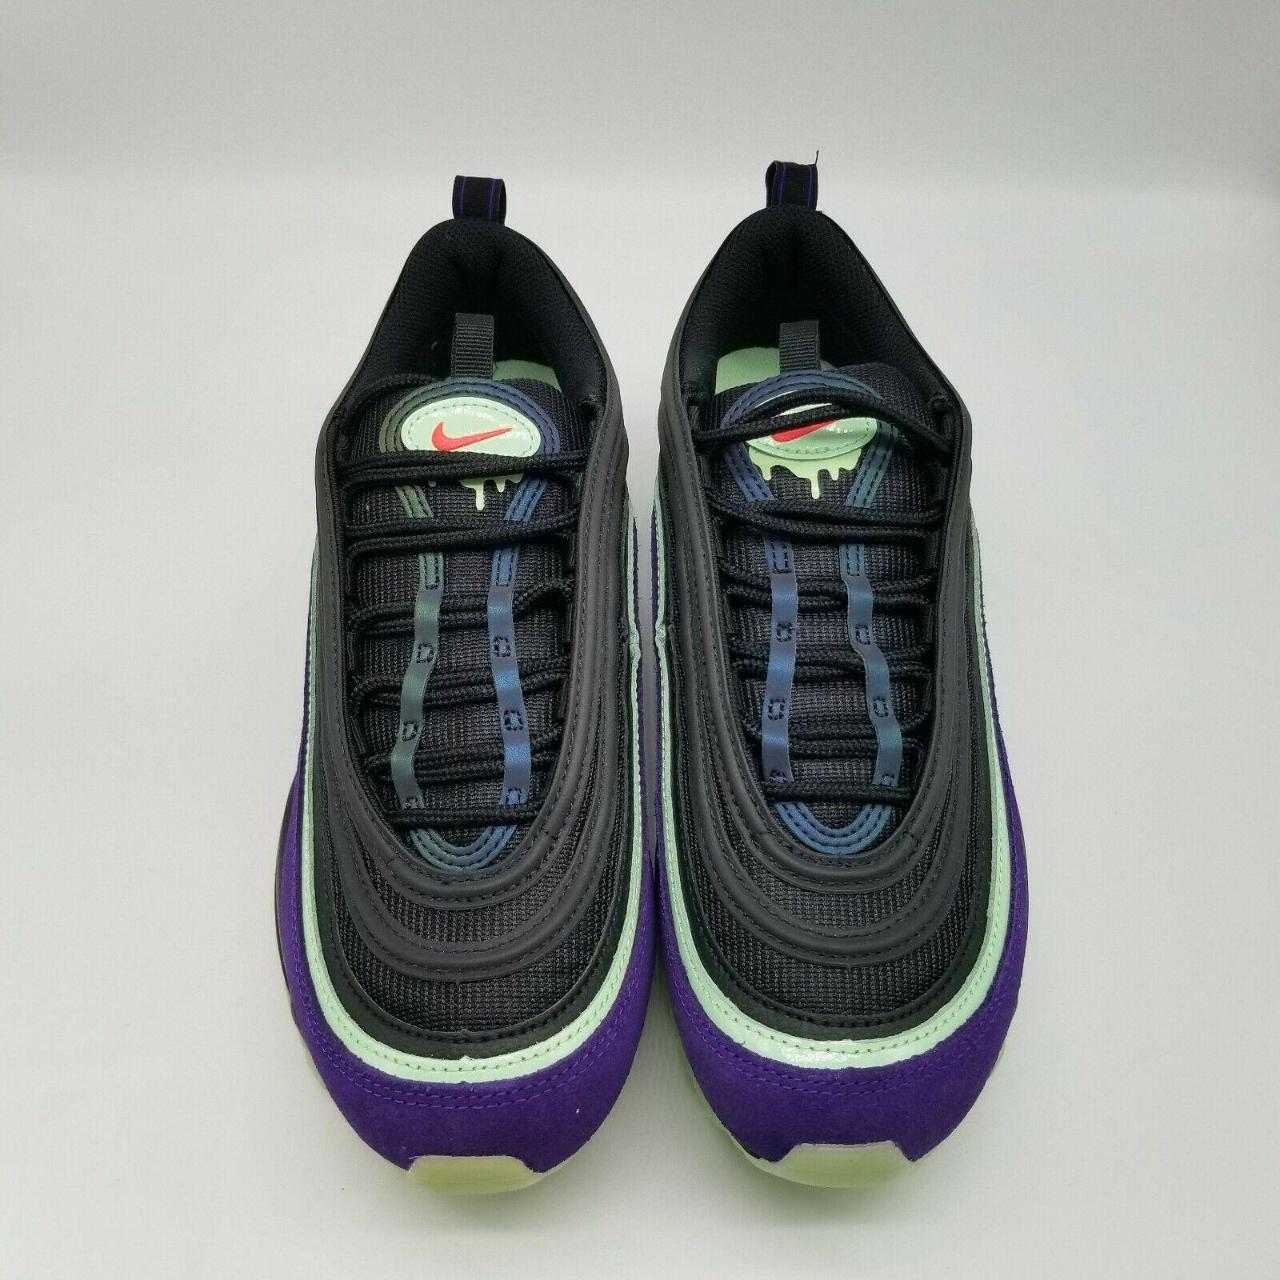 Product Image 2 - Nike Mens Air Max 97